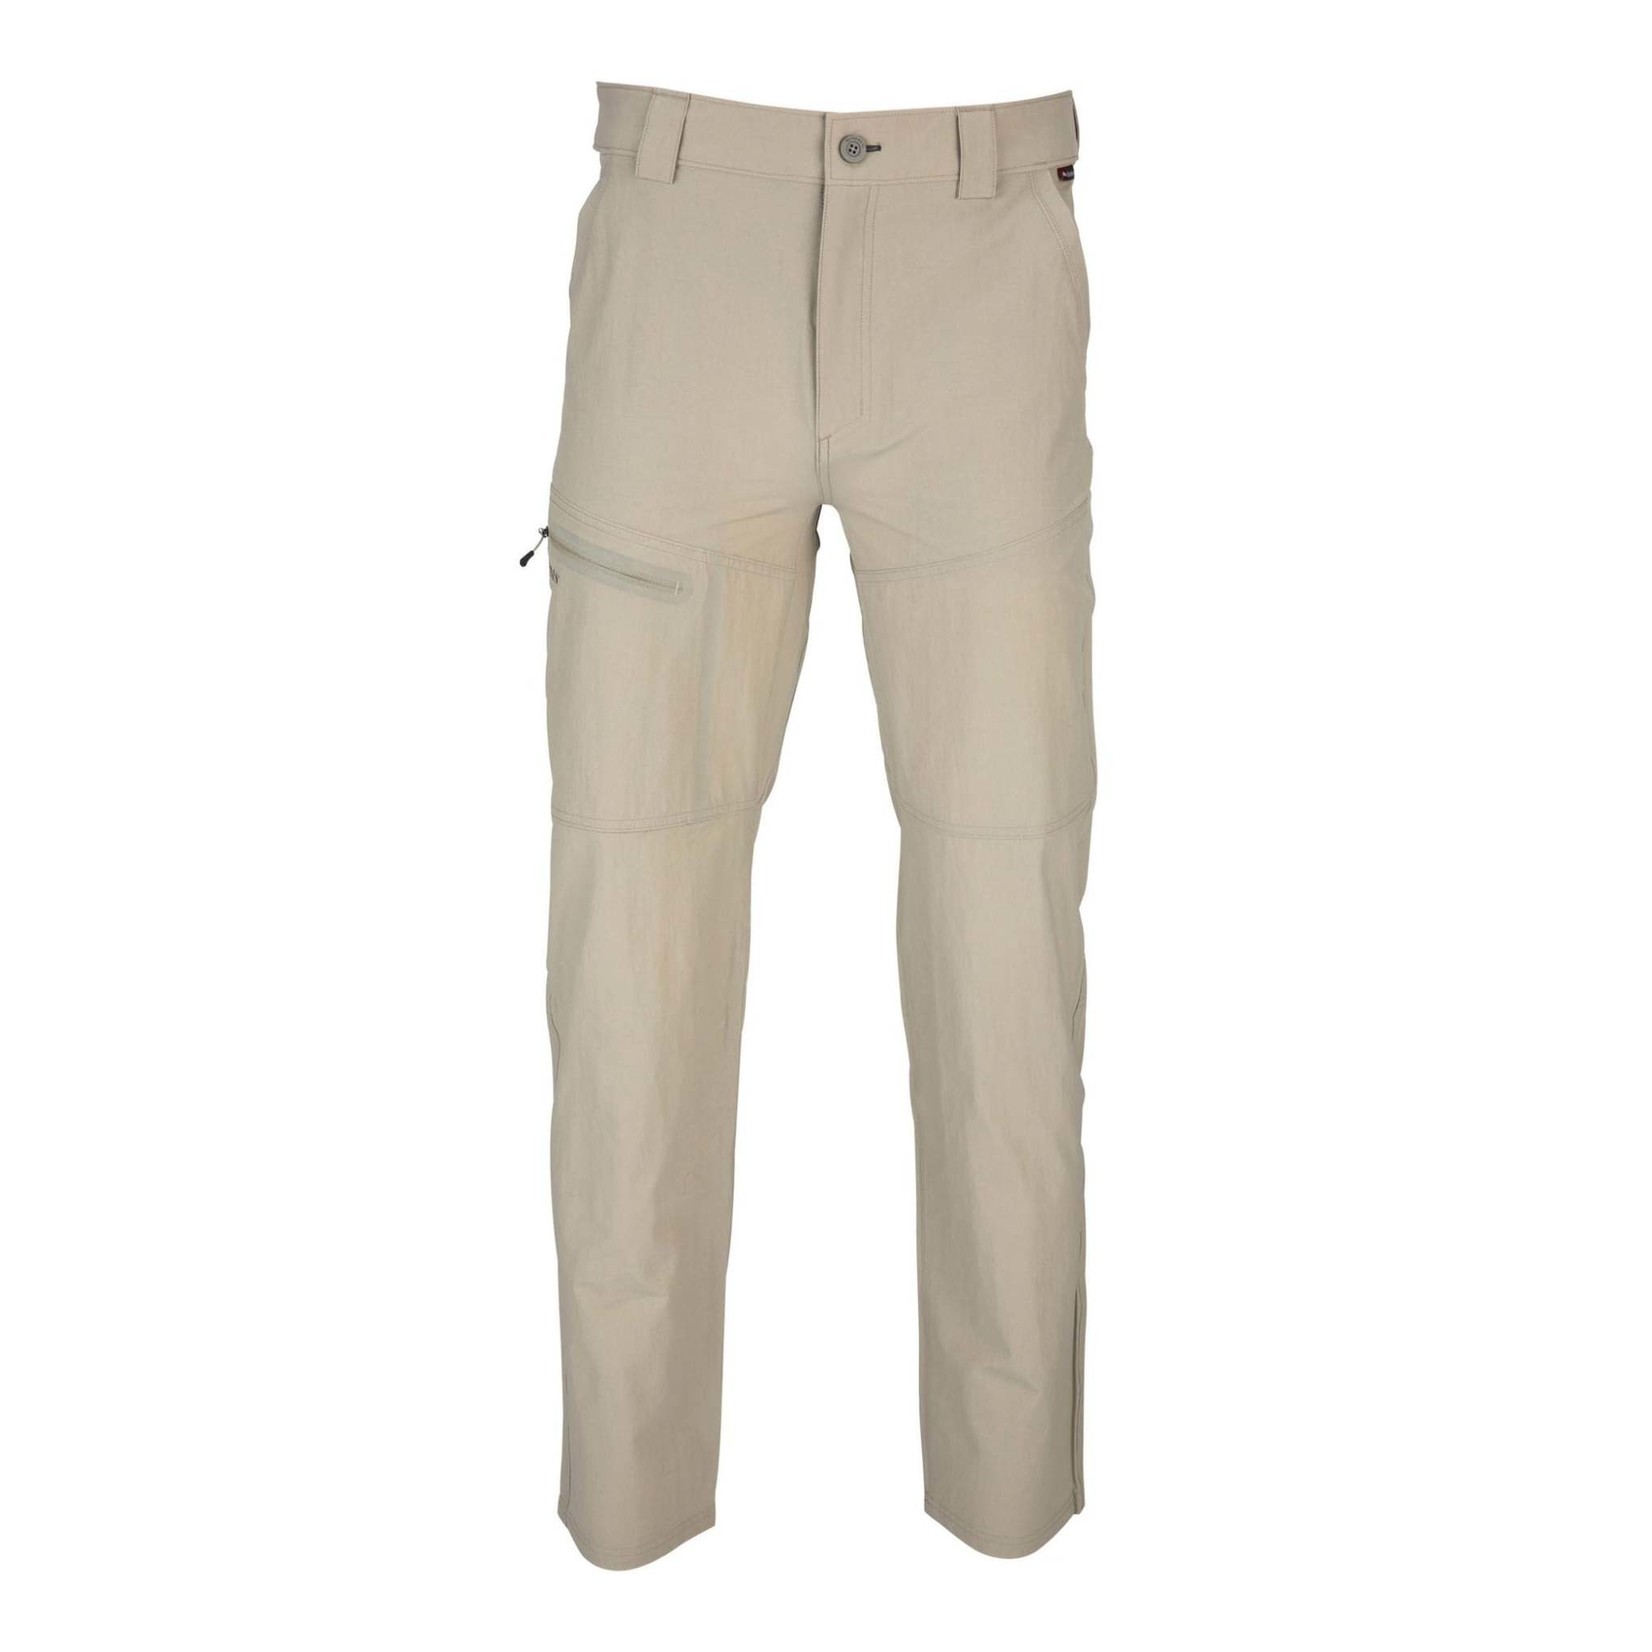 Simms Nylon Fishing Pants Pants for sale